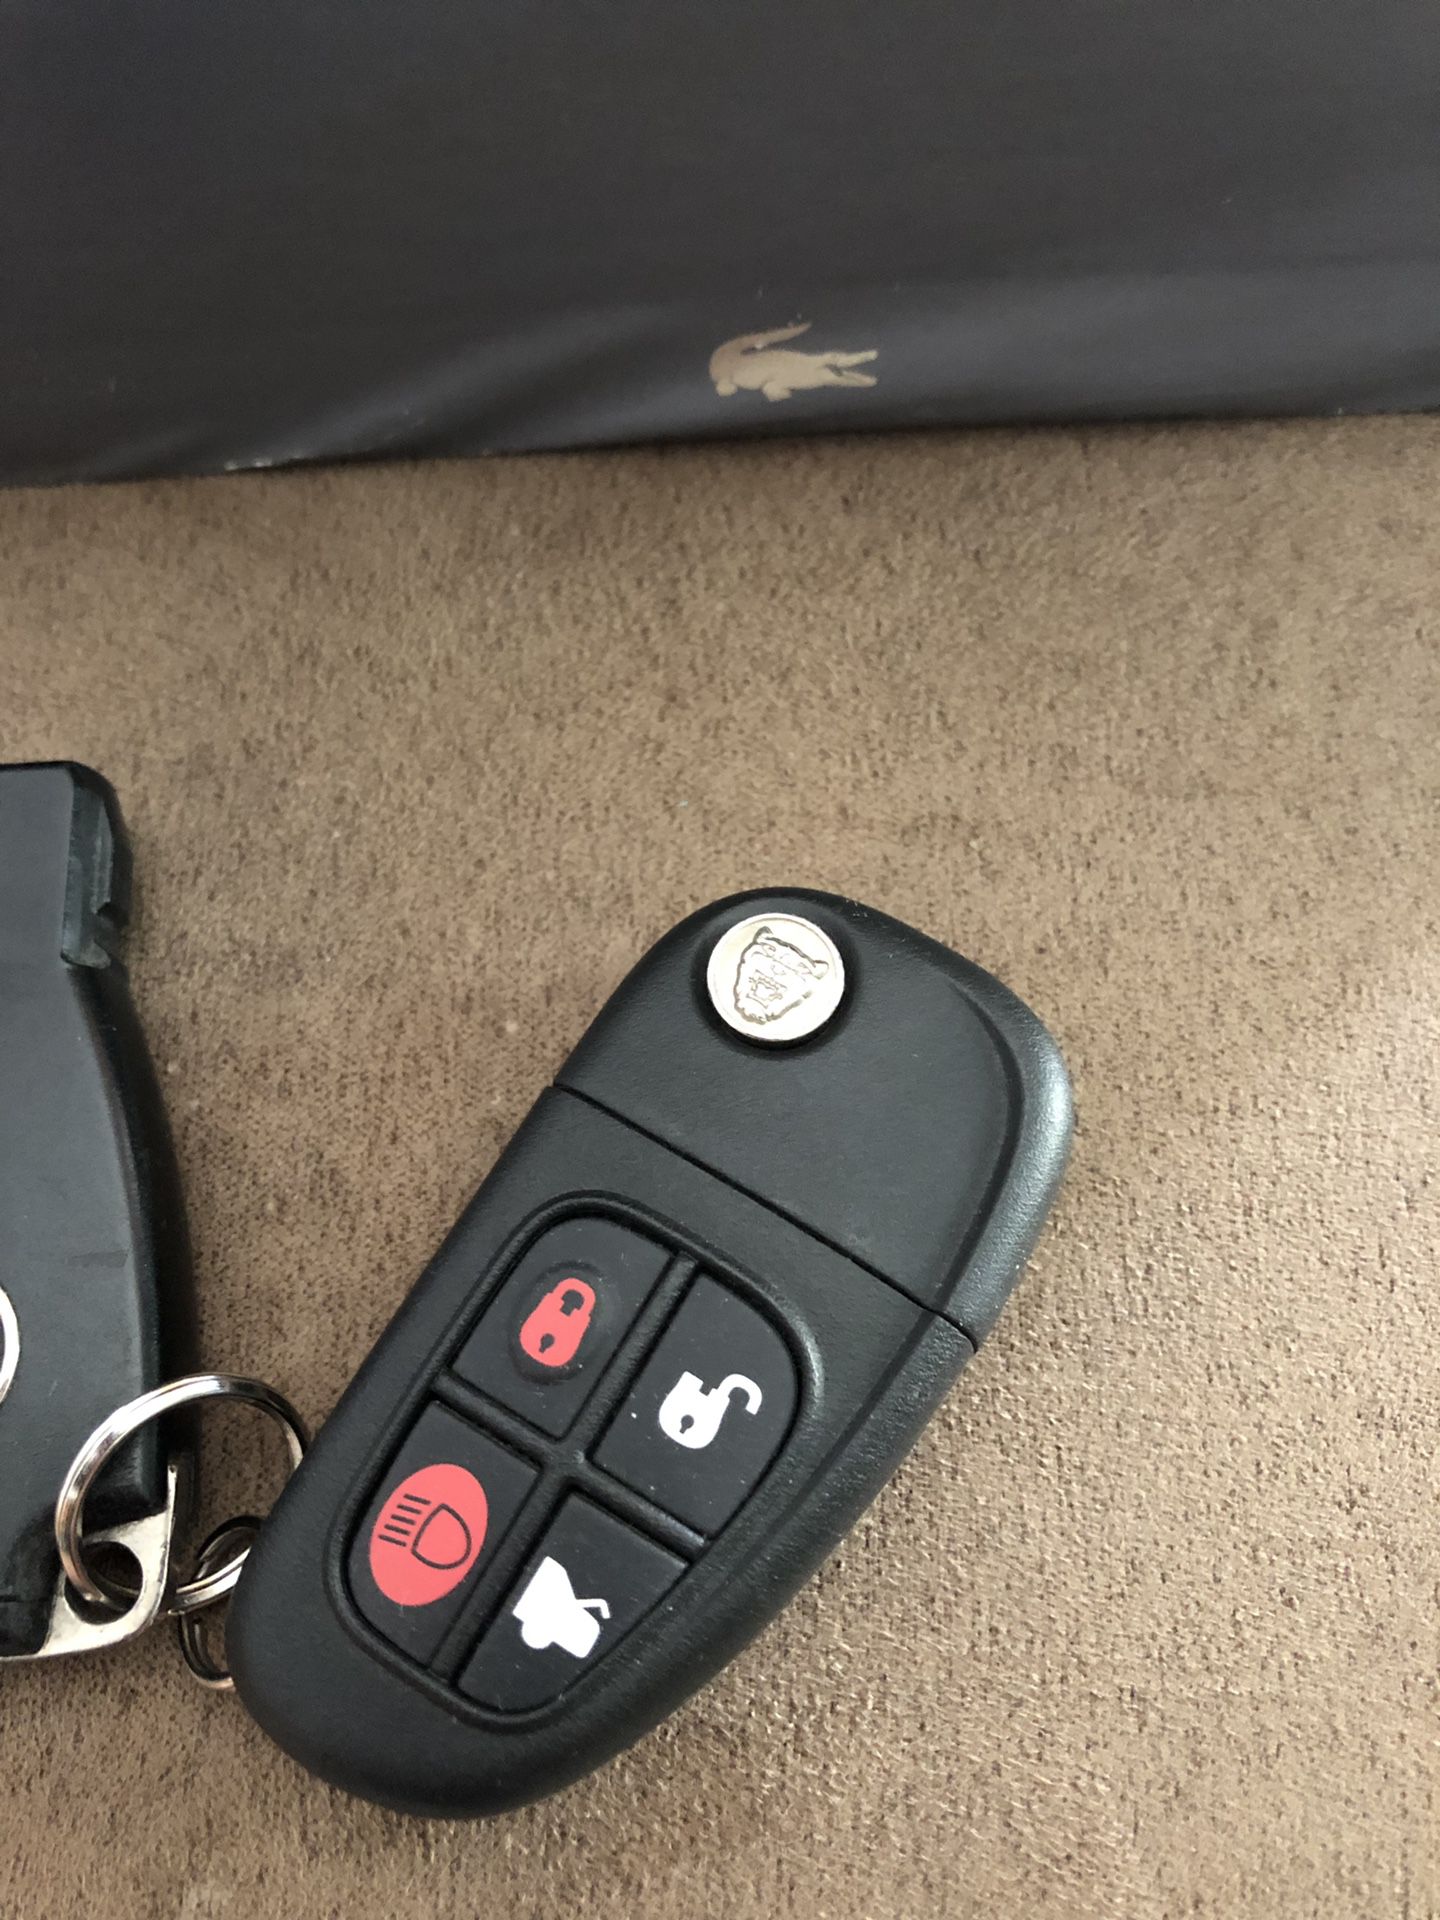 Jaguar key and Mercedes key